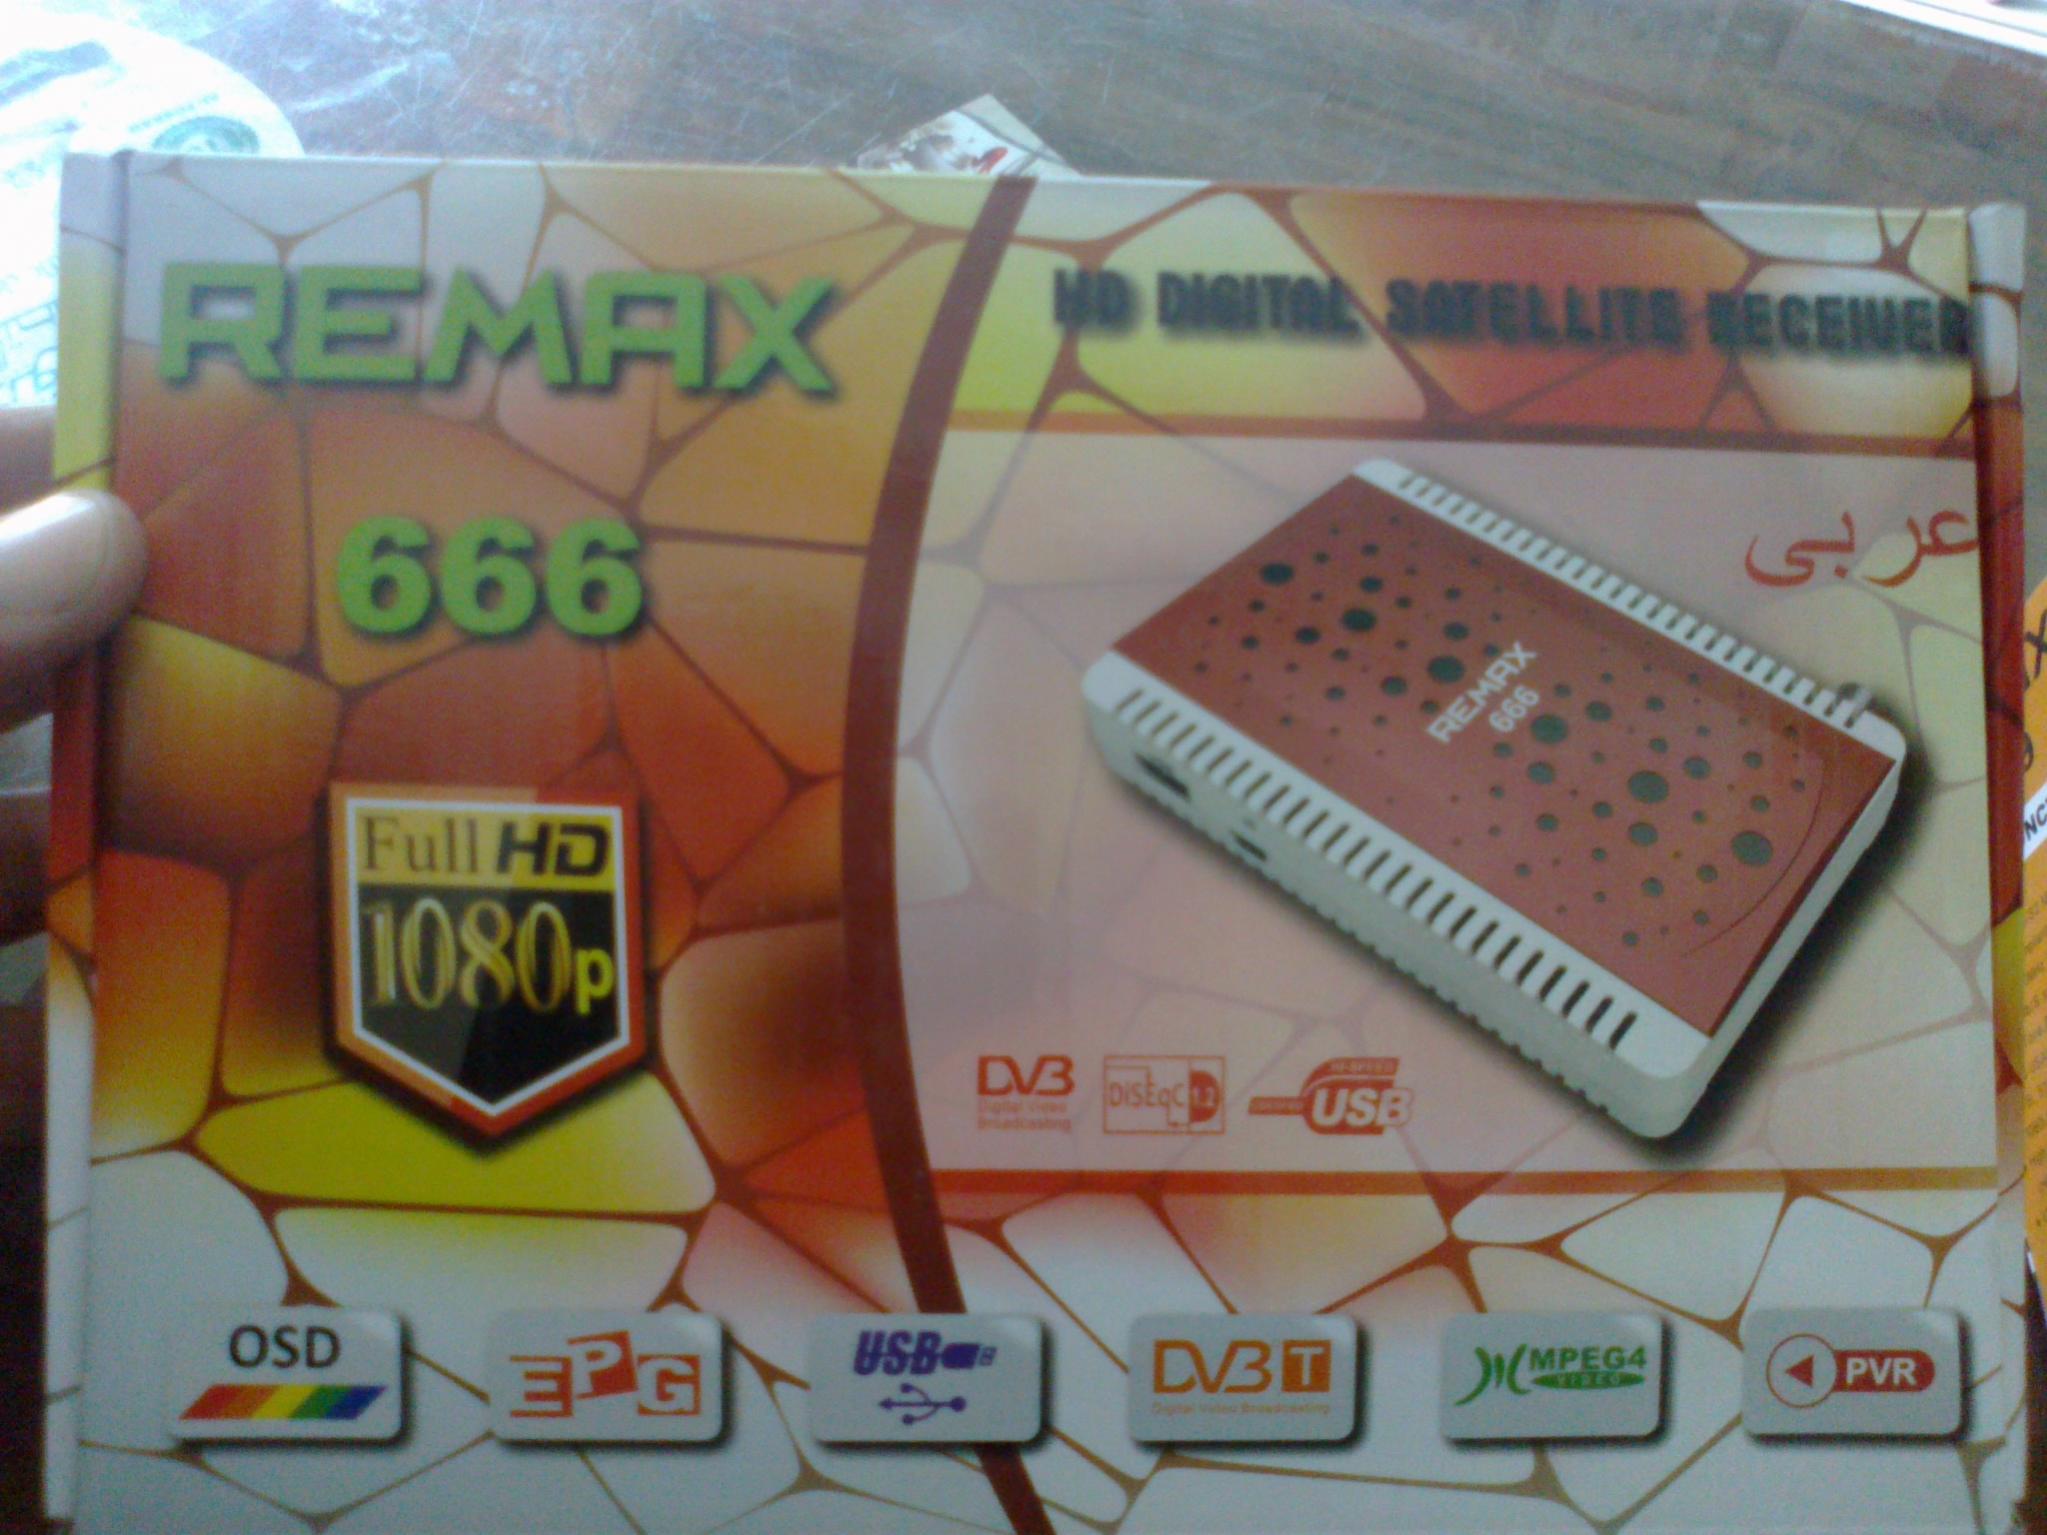 احدث ملف قنوات عربي REMAX 666 HD MINI - KEMIX 999 HD MIN معالج ALI-HD بتاريخ 6-7-2022 P_2378e26pu1